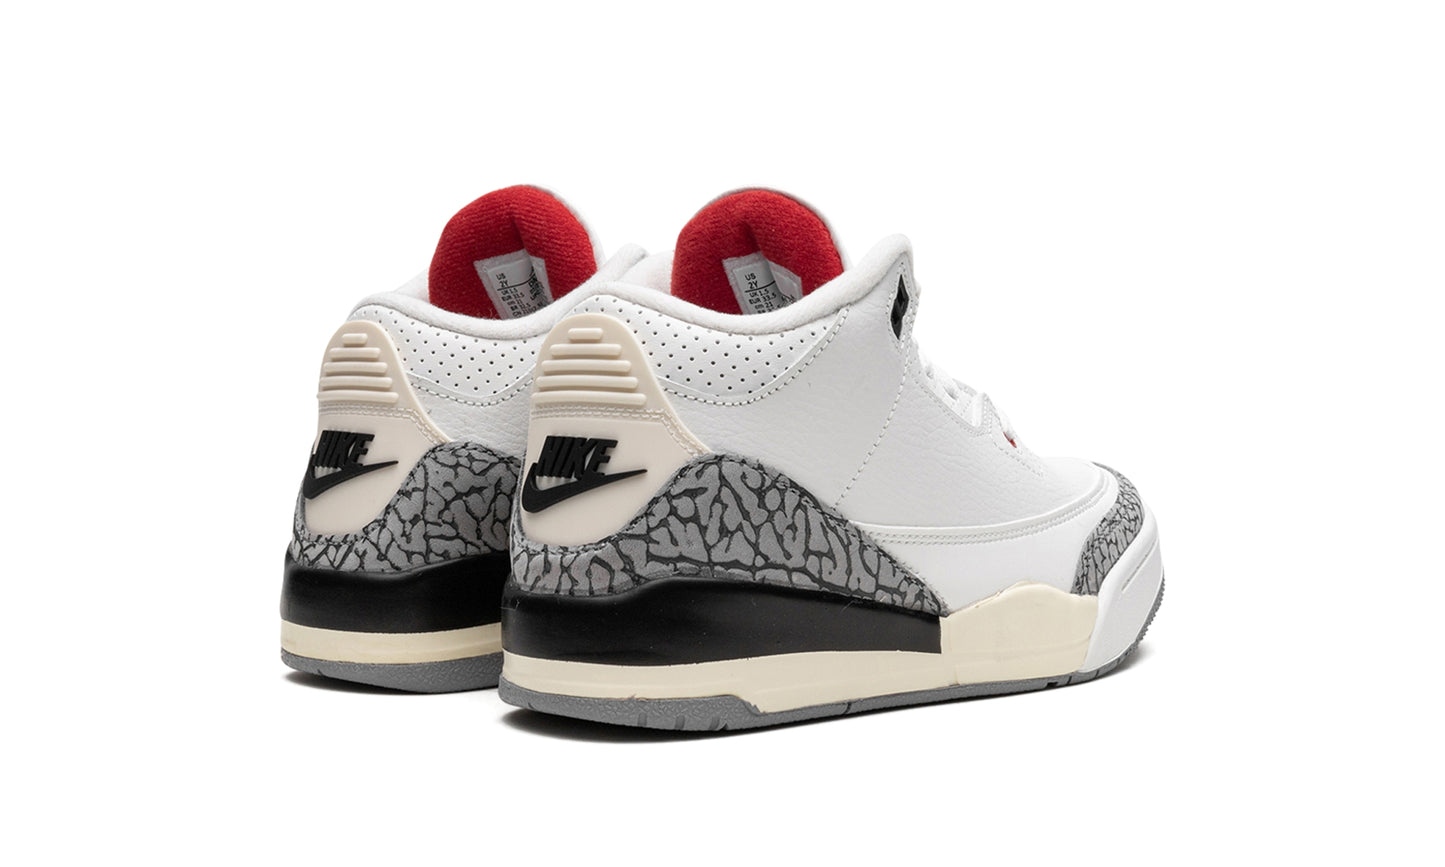 Air Jordan 3 Kids 'White Cement' back view